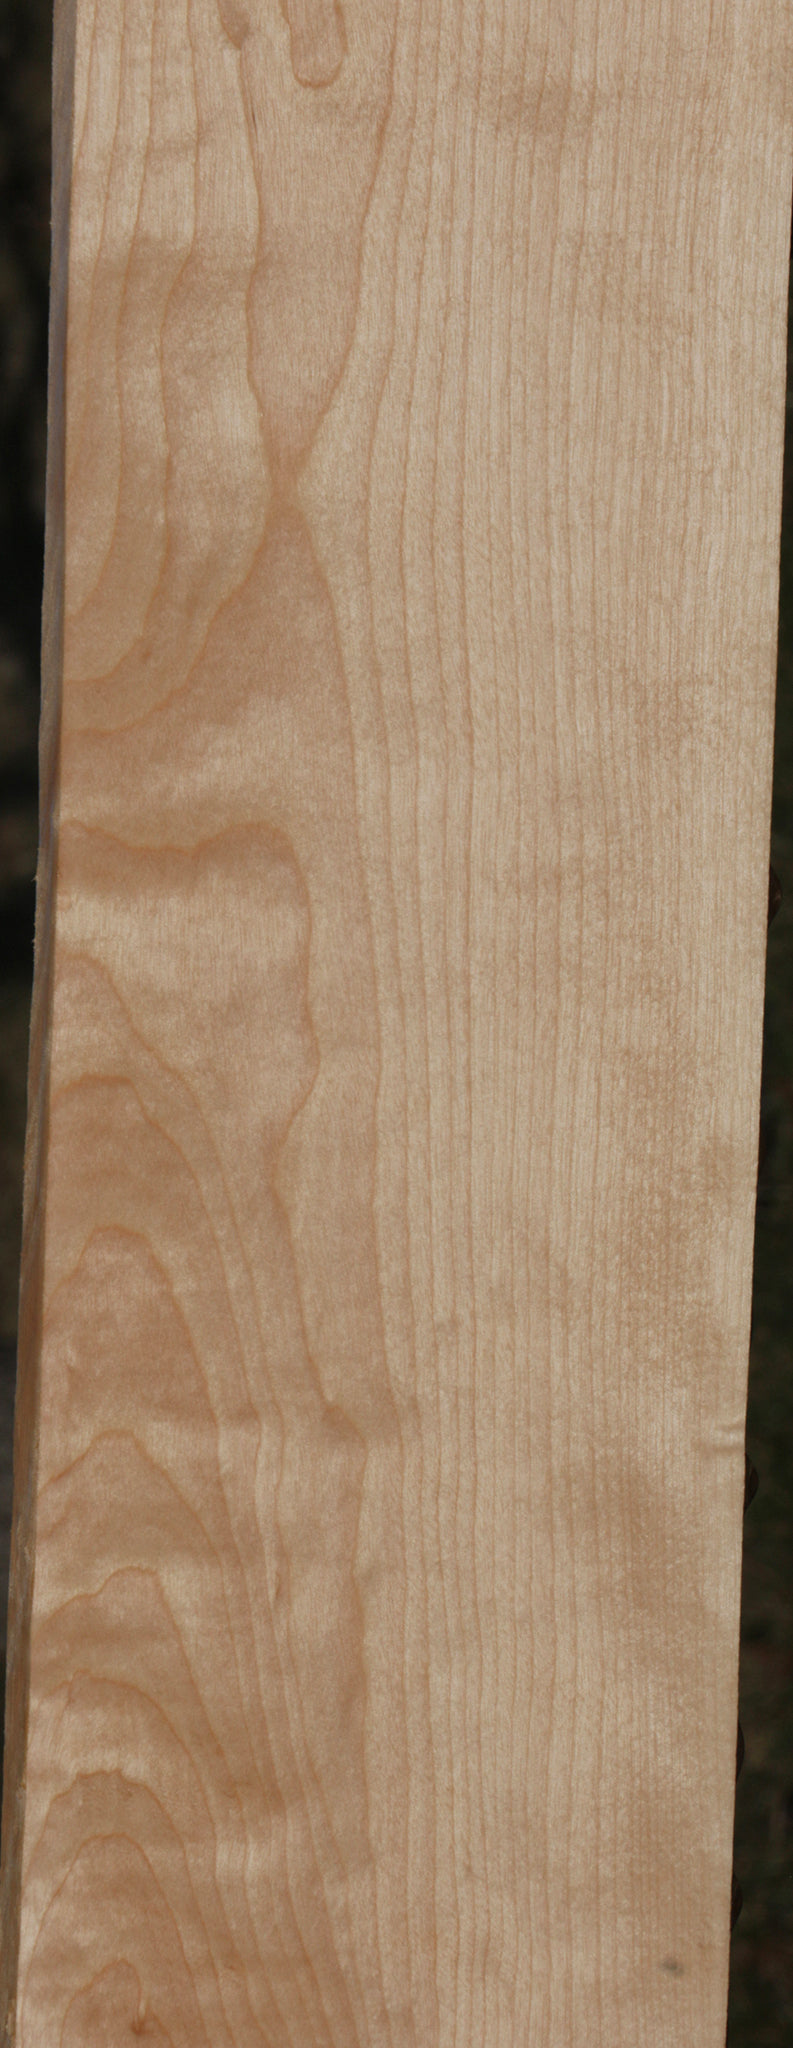 Curly Birch Lumber